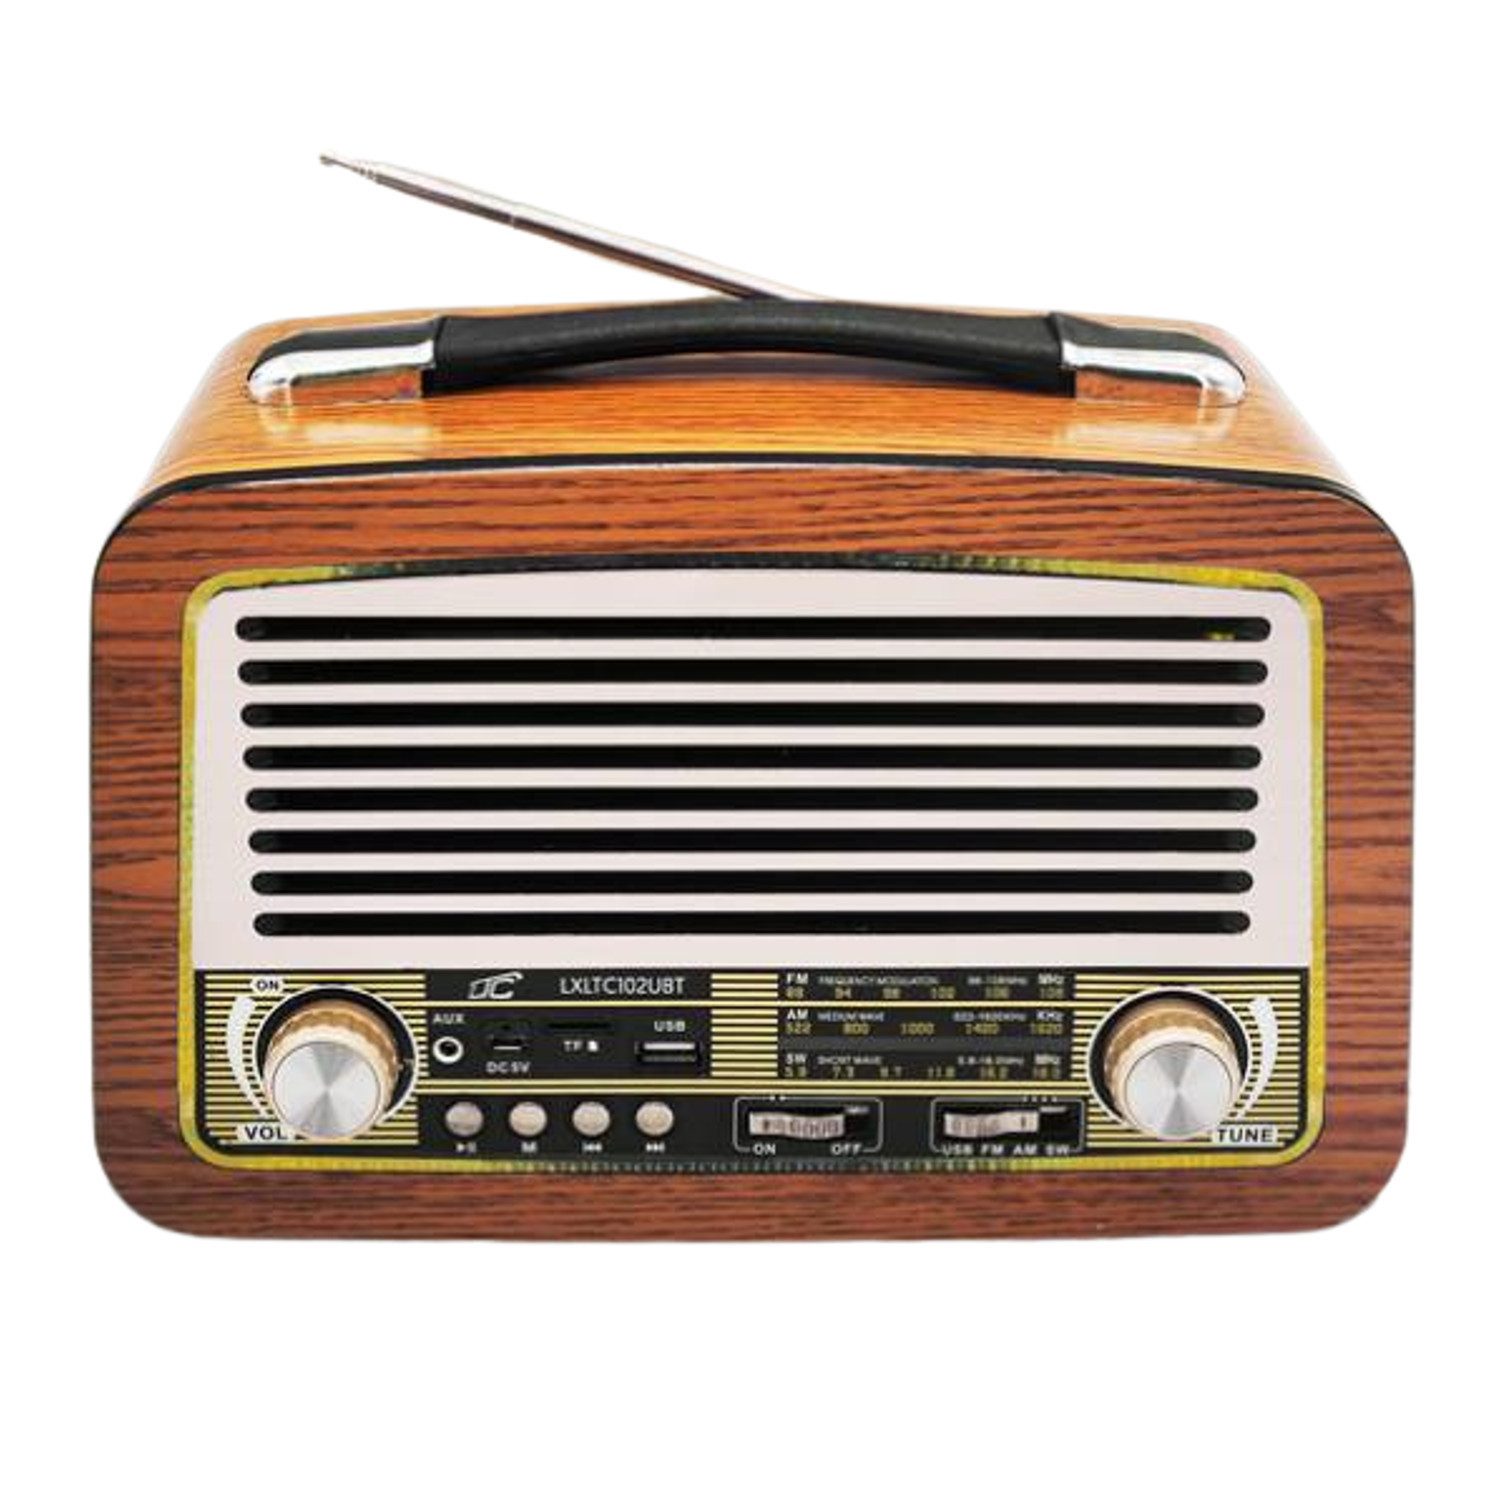 LTC LXLTC102UBT Retro-Radio (FM-Tuner, 5,00 W, Tragbares Radio FM AM Olza Retro mit Beleuchtung)